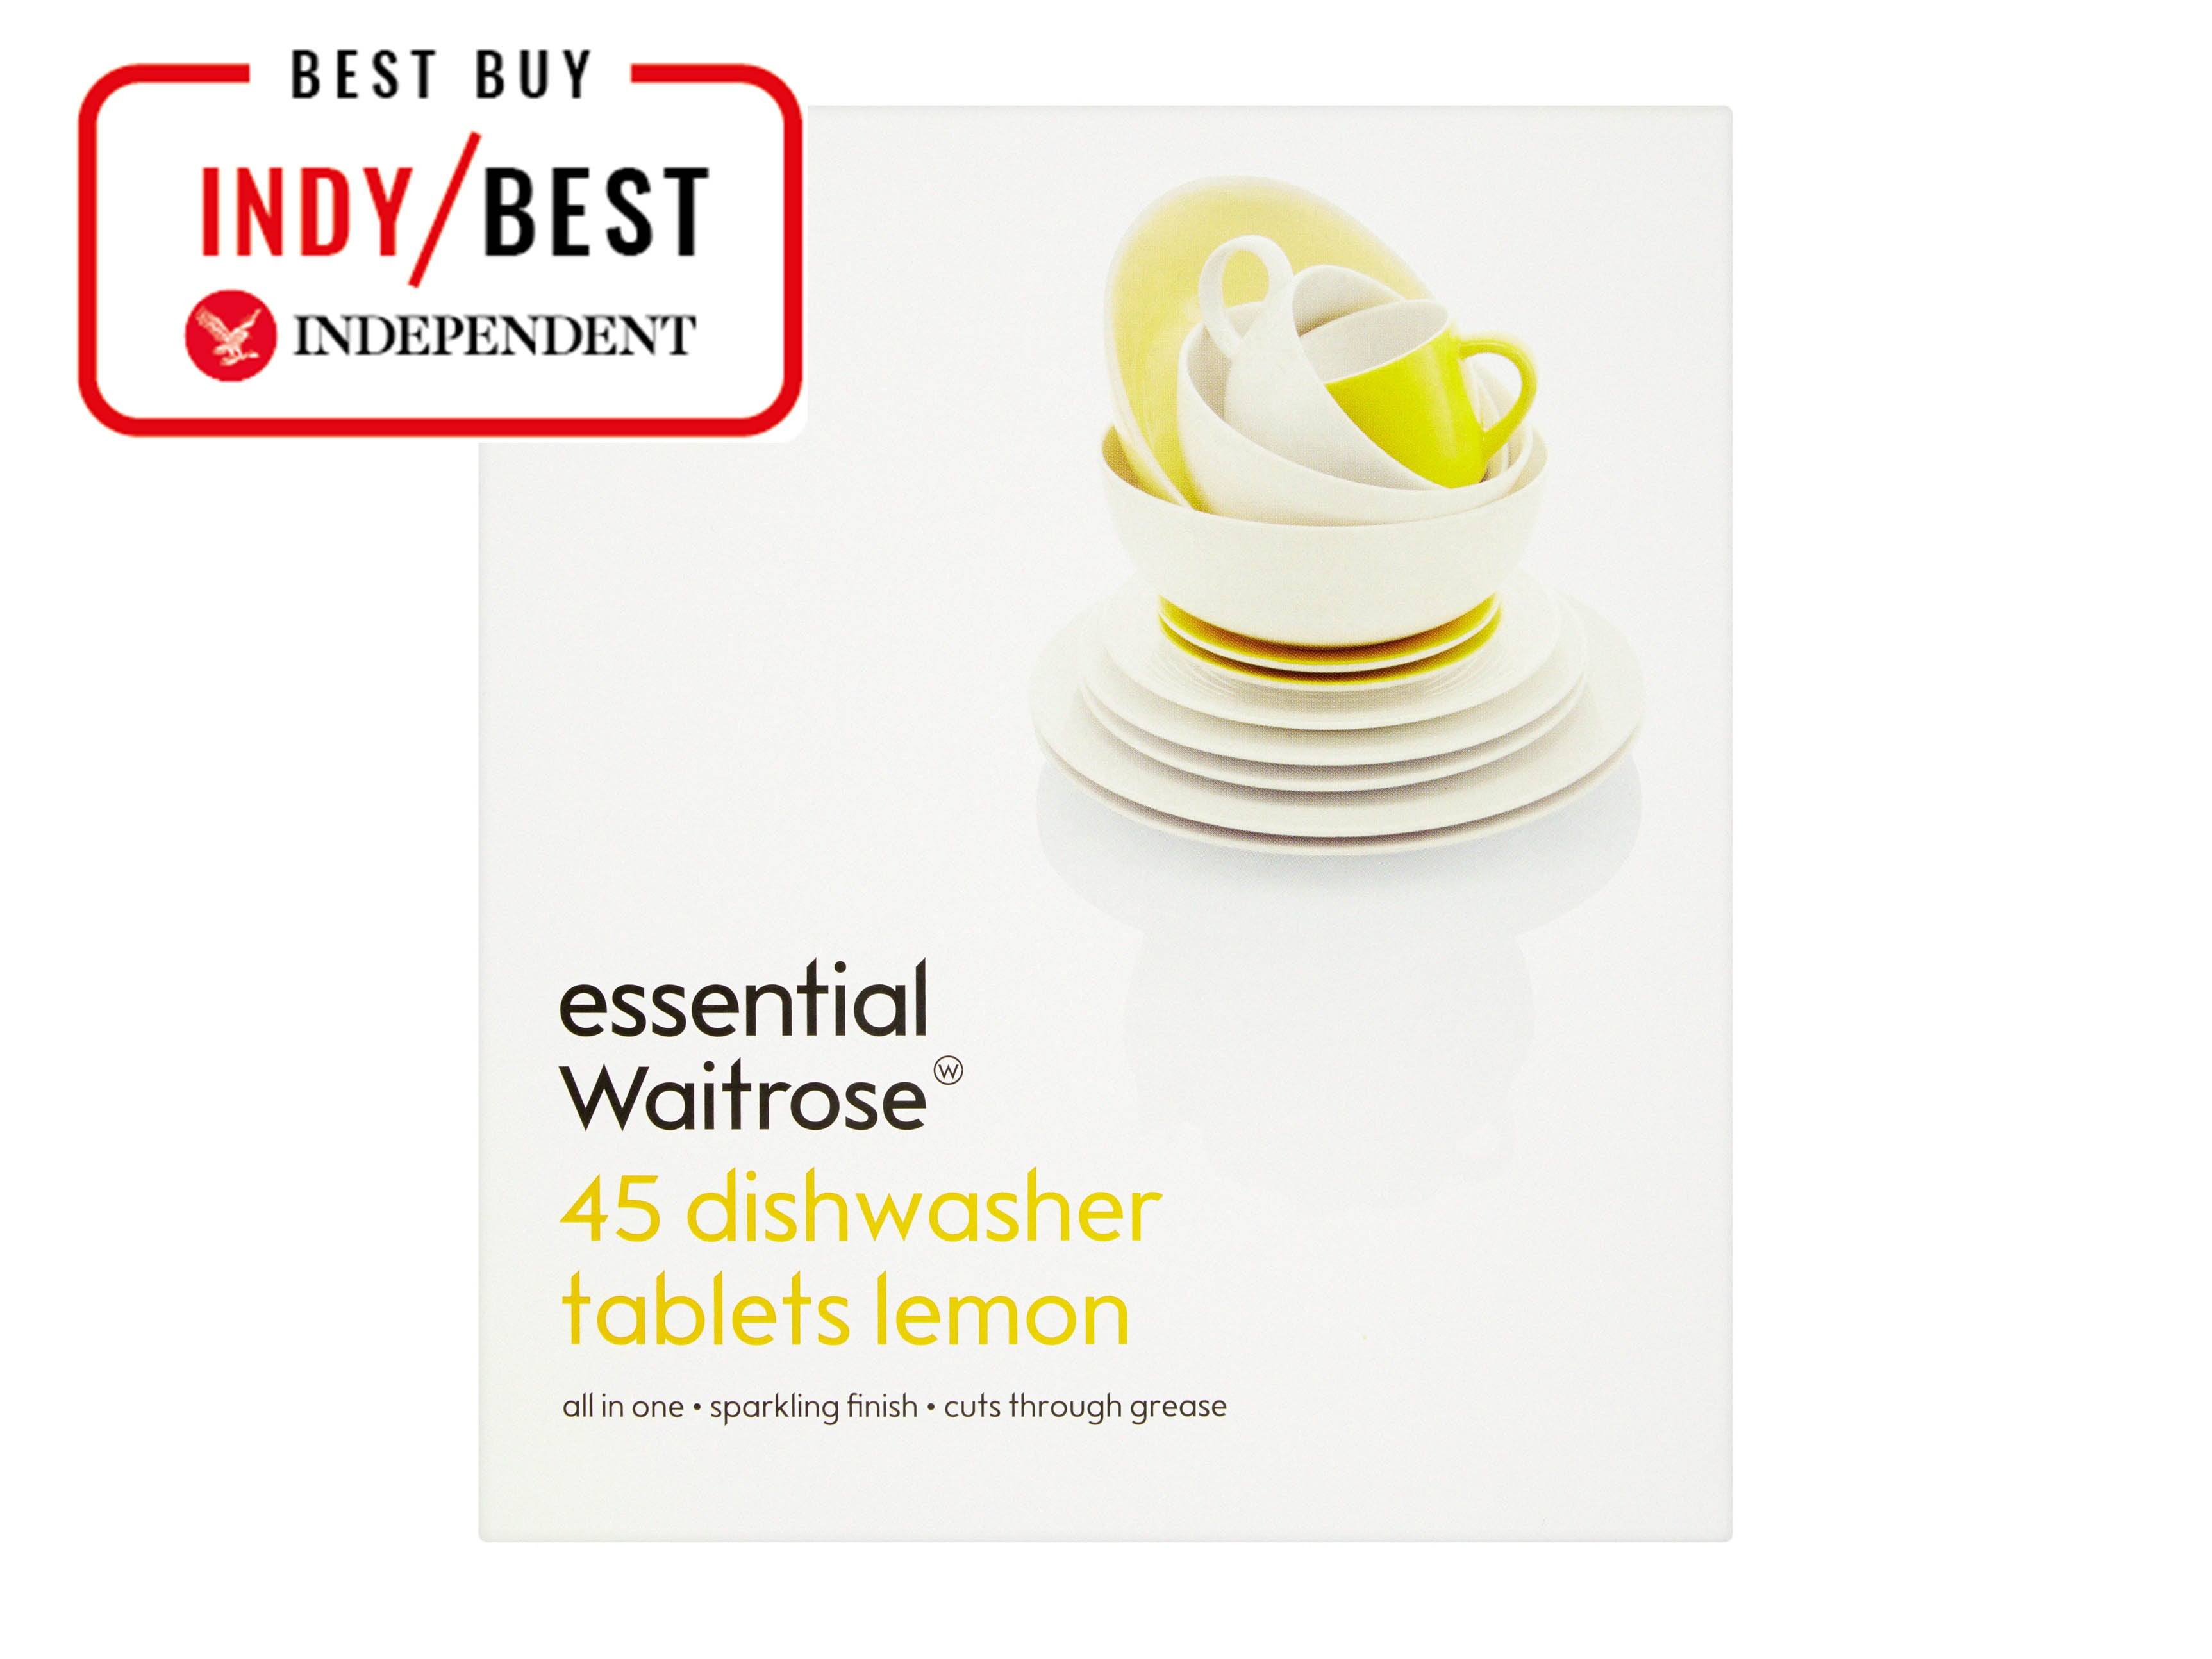 Essential Waitrose dishwasher tablets lemon.jpg